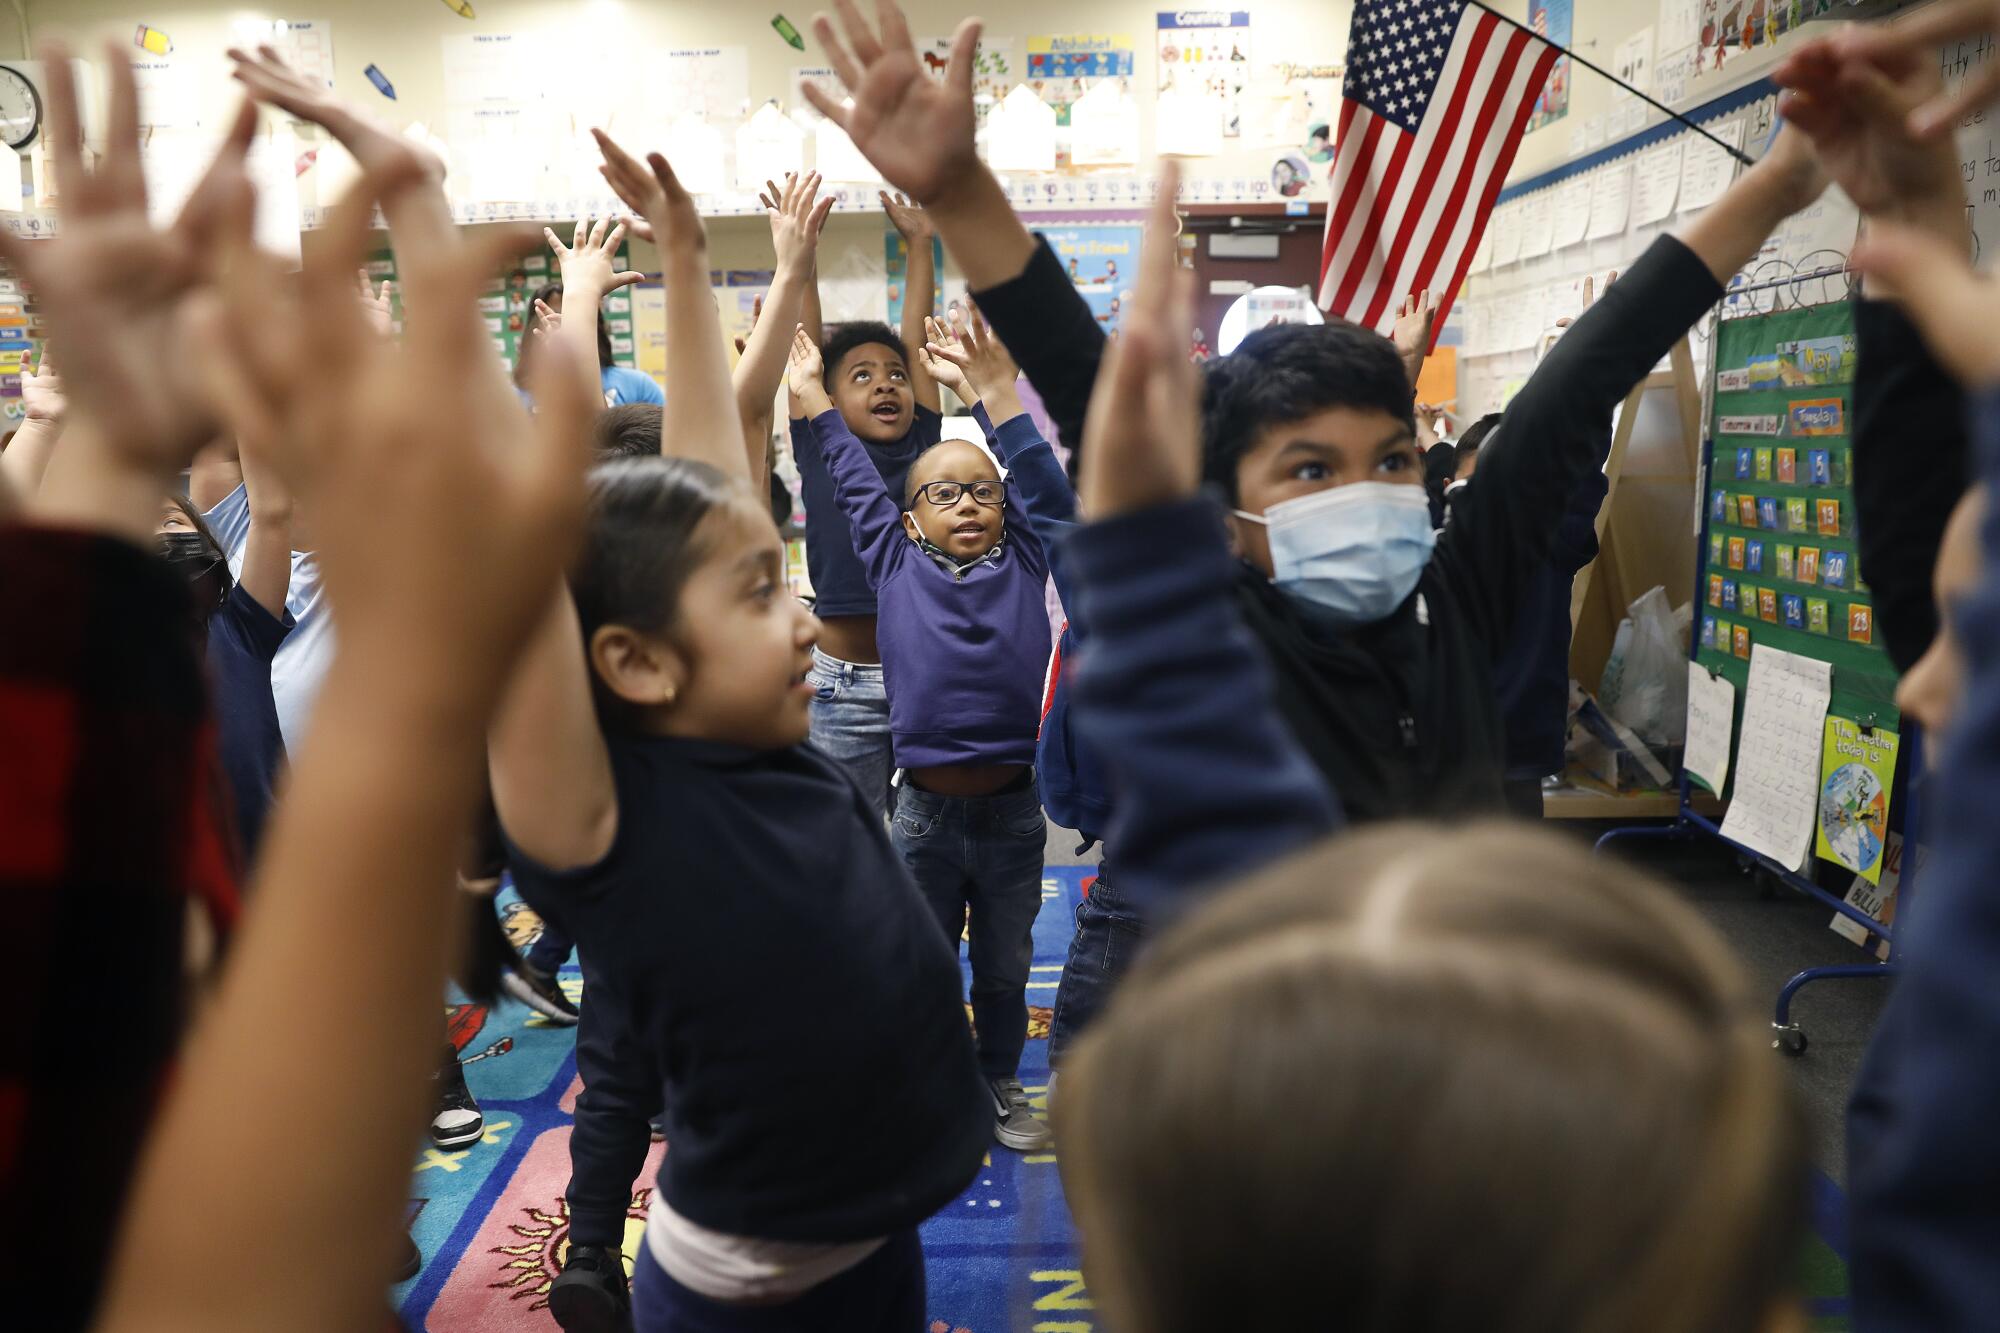 Small children raise their arms in a classroom.